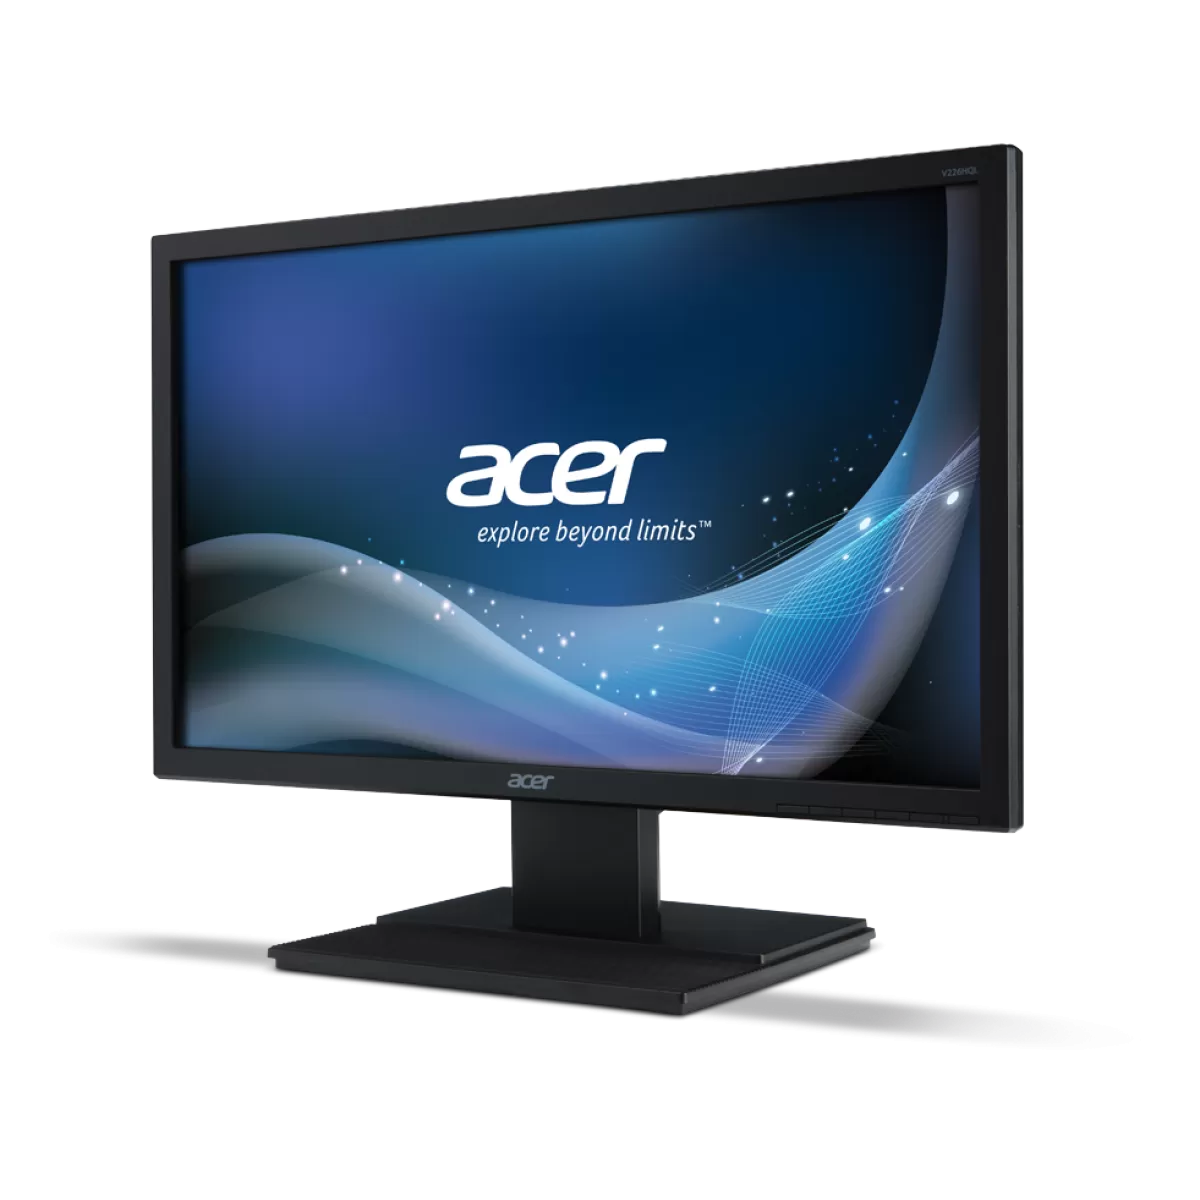 Монитор Monitor Acer V226HQLBbd, LED, 21.5 (55 cm), Format: 16:9, Resolution: Full HD (1920х1080), Response time: 5 ms, Contrast: 100M:1, Brightness: 200 cd/m2, Viewing Angle: 90(H)/65 (V), VGA, DVI, Energy Star 6.0, Acer ComfyView, Acer EcoDisplay, Acer